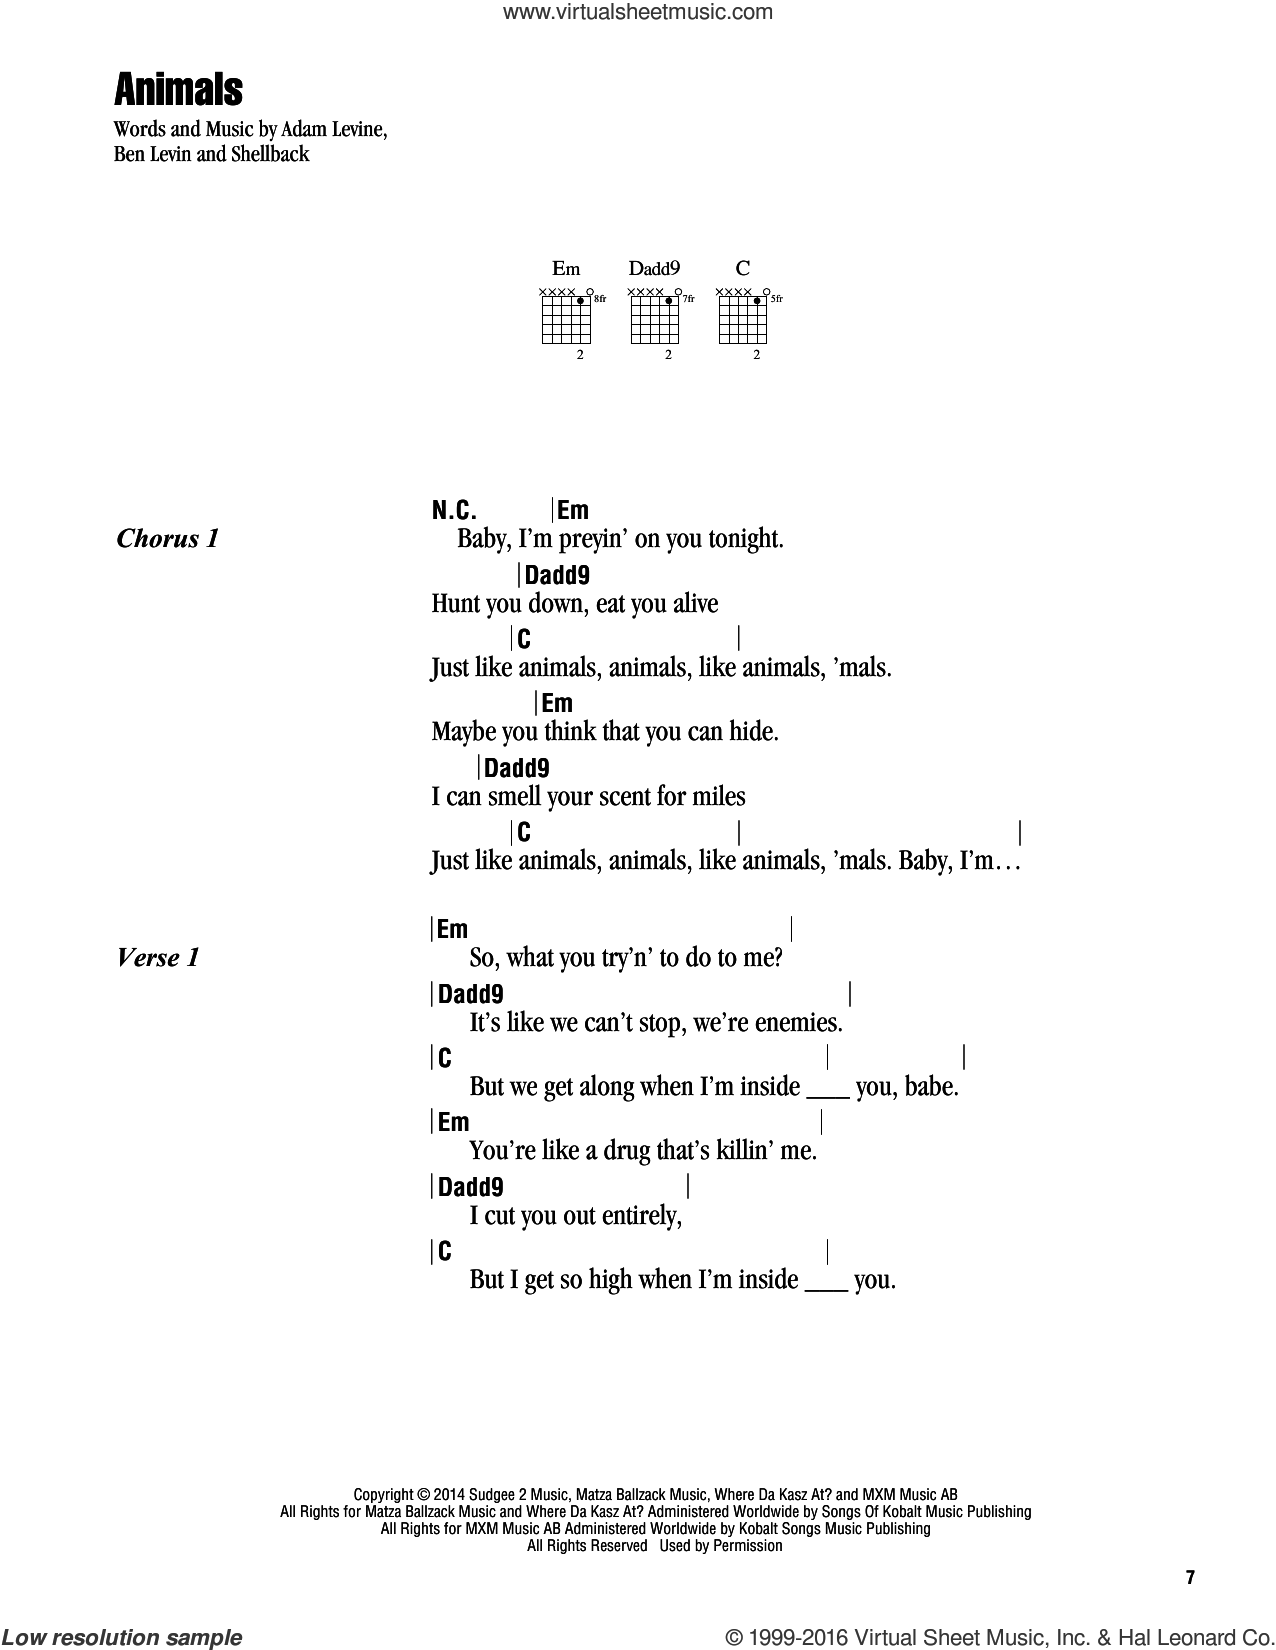 Animals sheet music for guitar (chords) (PDF)